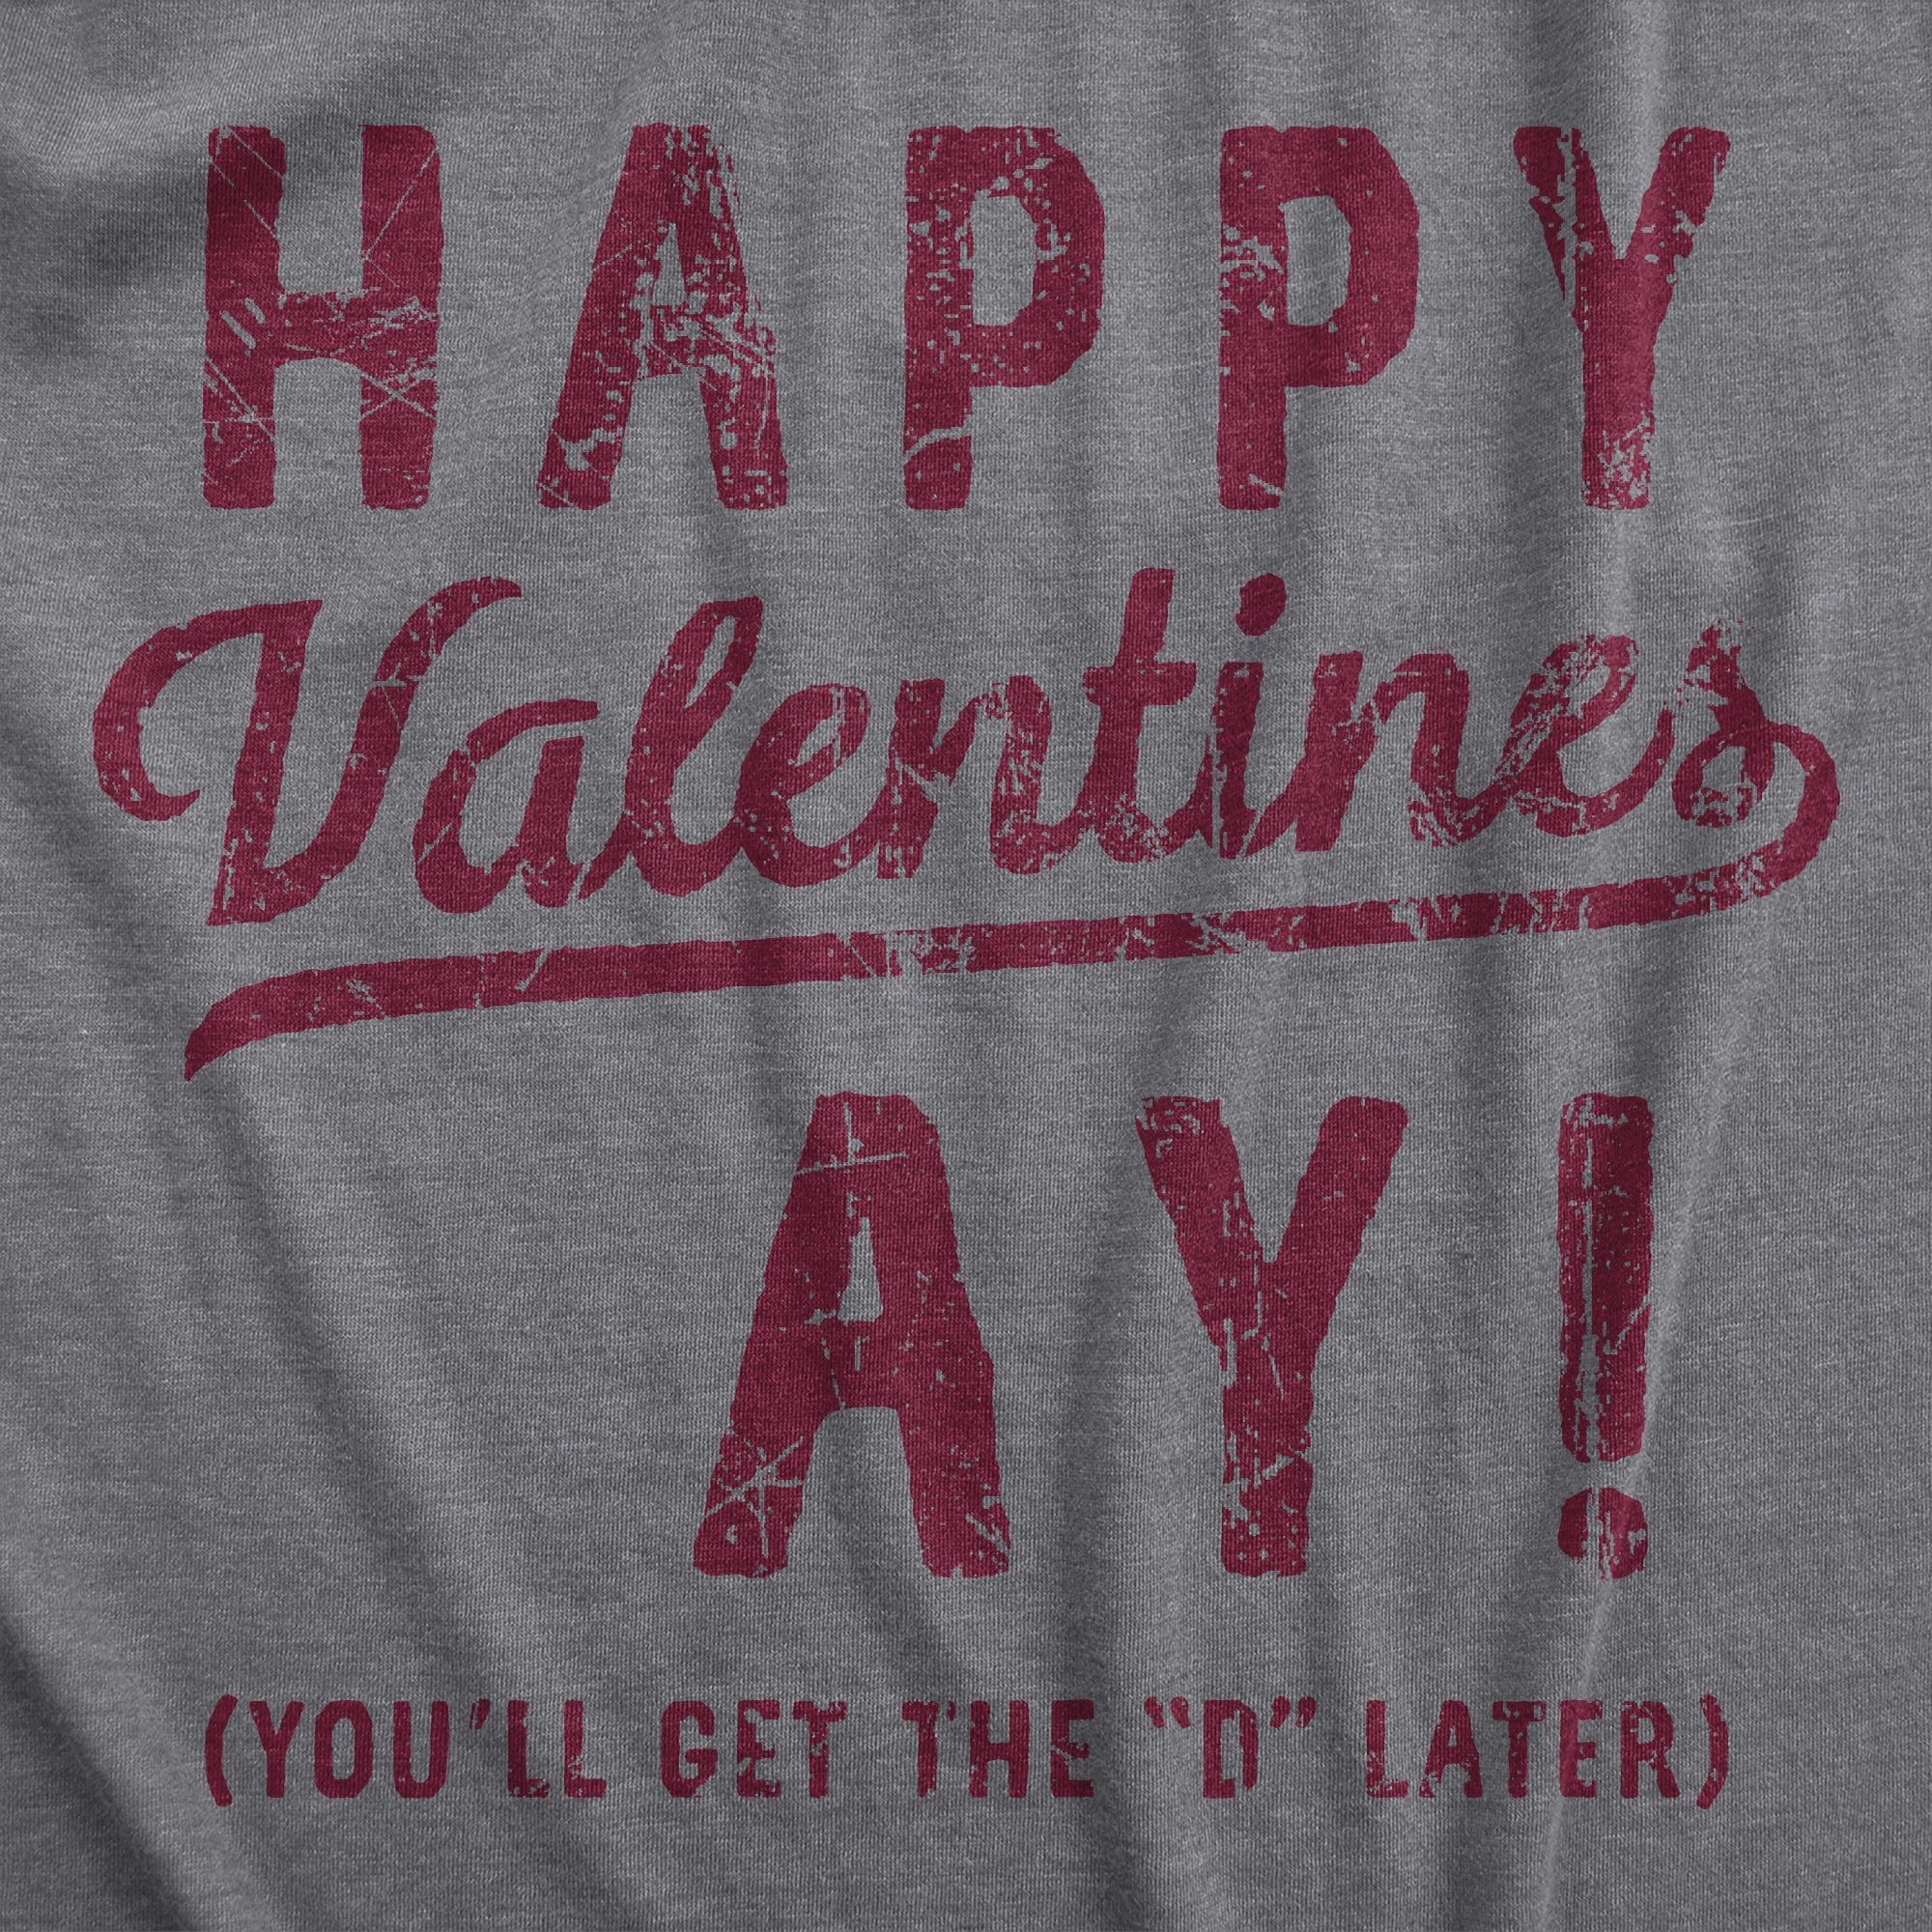 Funny Dark Heather Grey - AY Happy Valentines Ay Mens T Shirt Nerdy Valentine's Day sex Tee